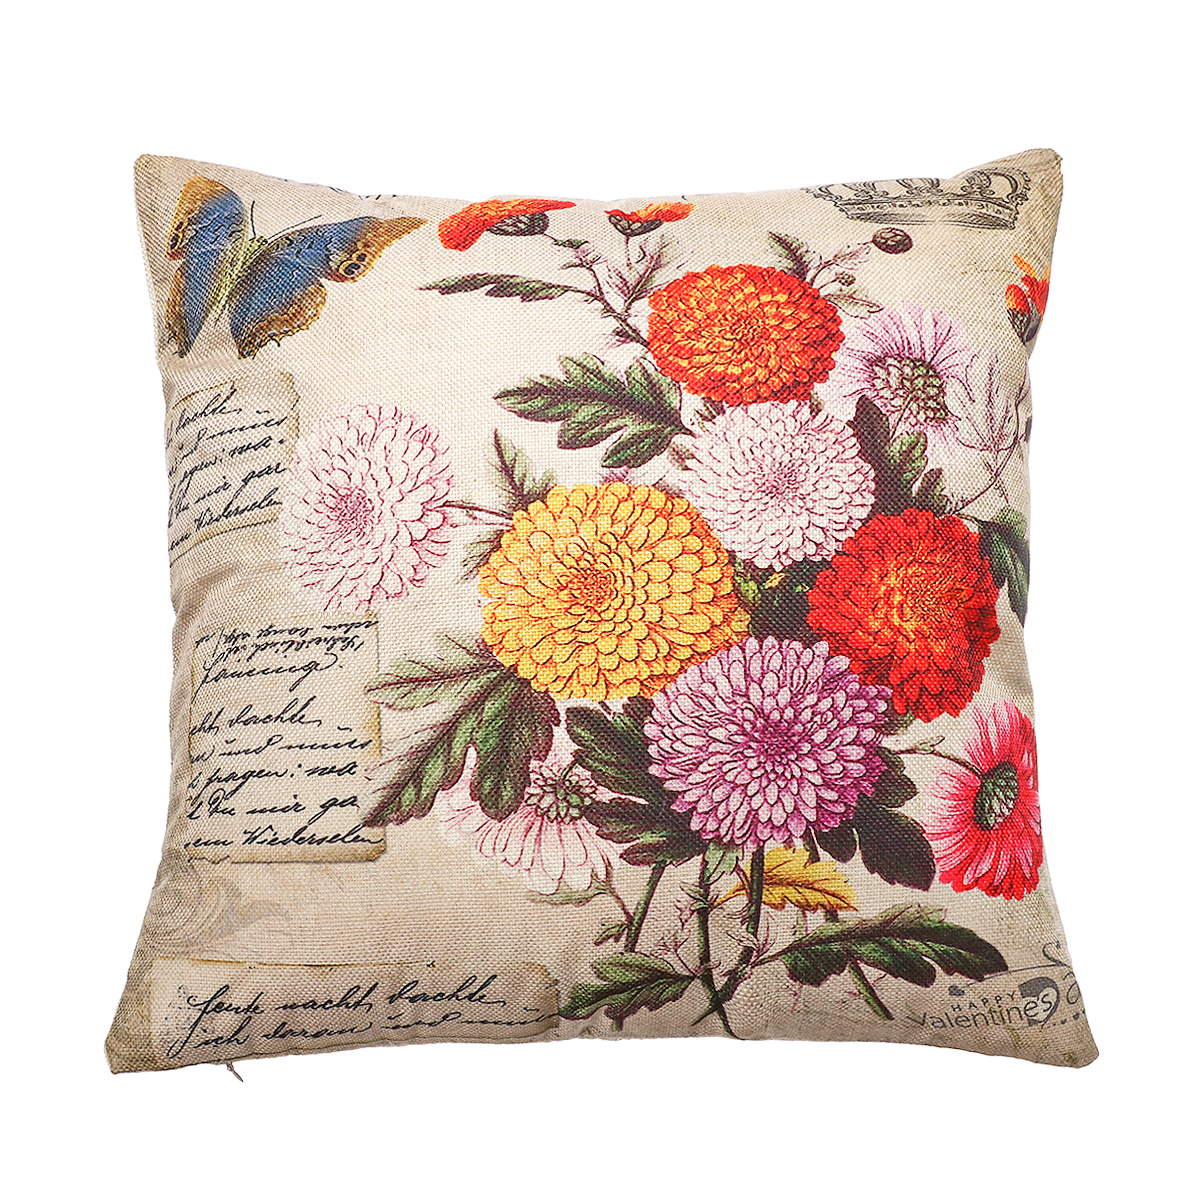 Vintage-Flower-Cotton-Linen-Cushion-Cover-Throw-Pillow-Case-Sofa-Home-Decor-1597138-5